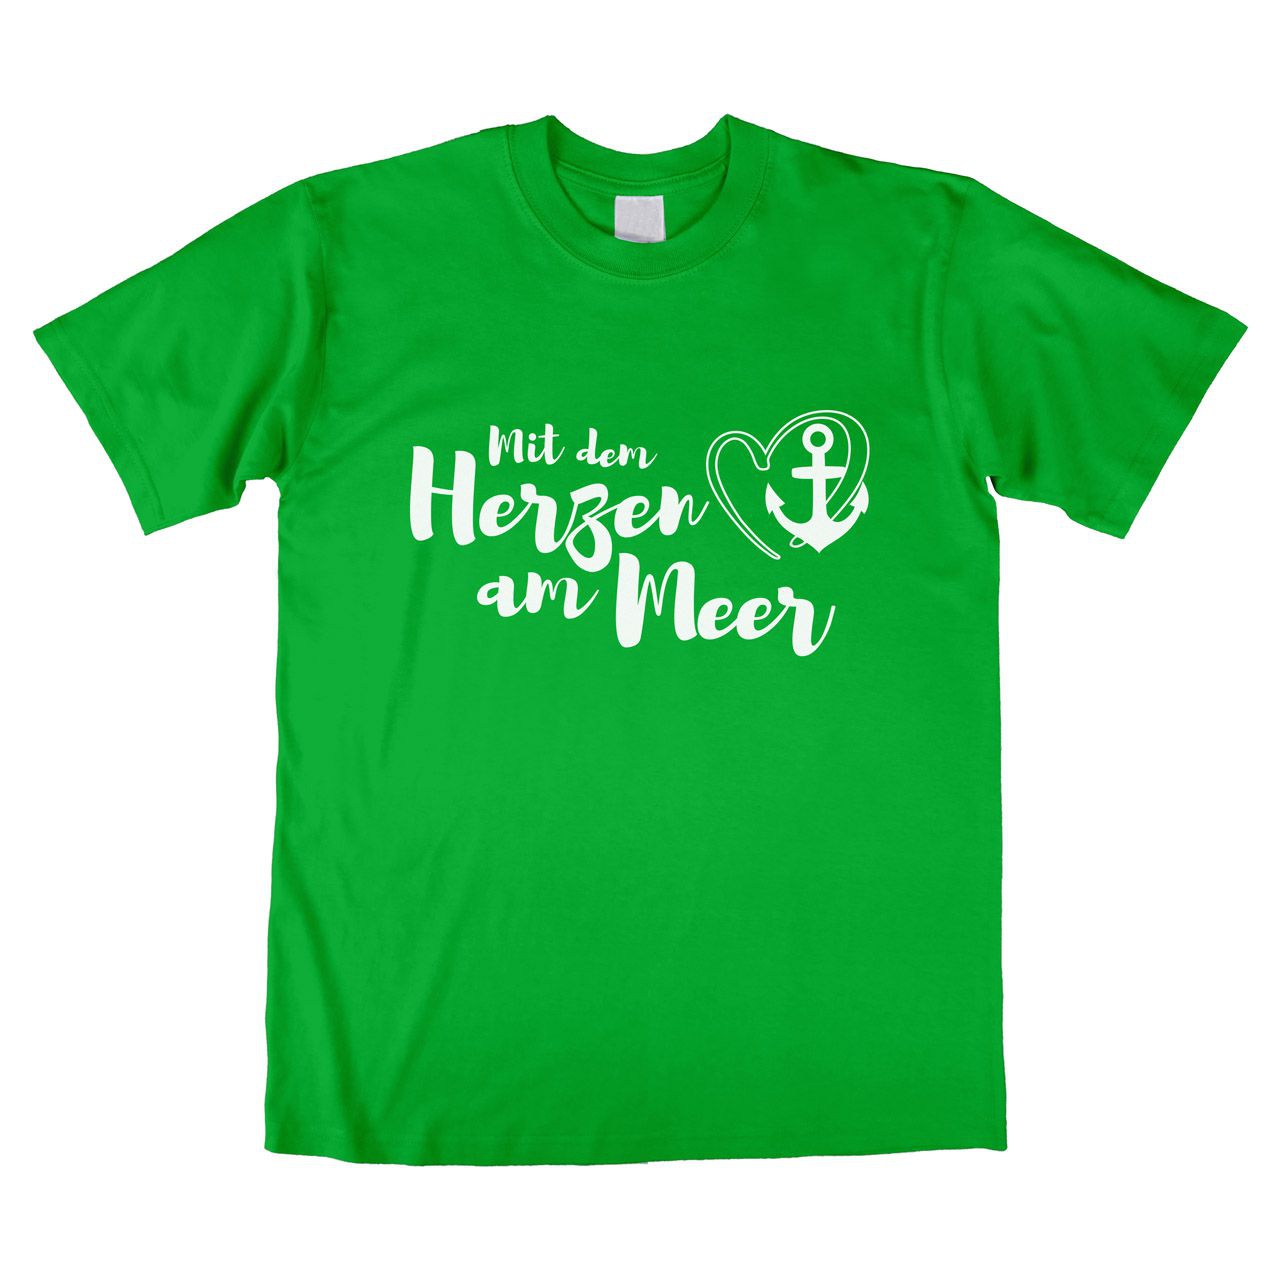 Mit dem Herzen am Meer Unisex T-Shirt grün Medium